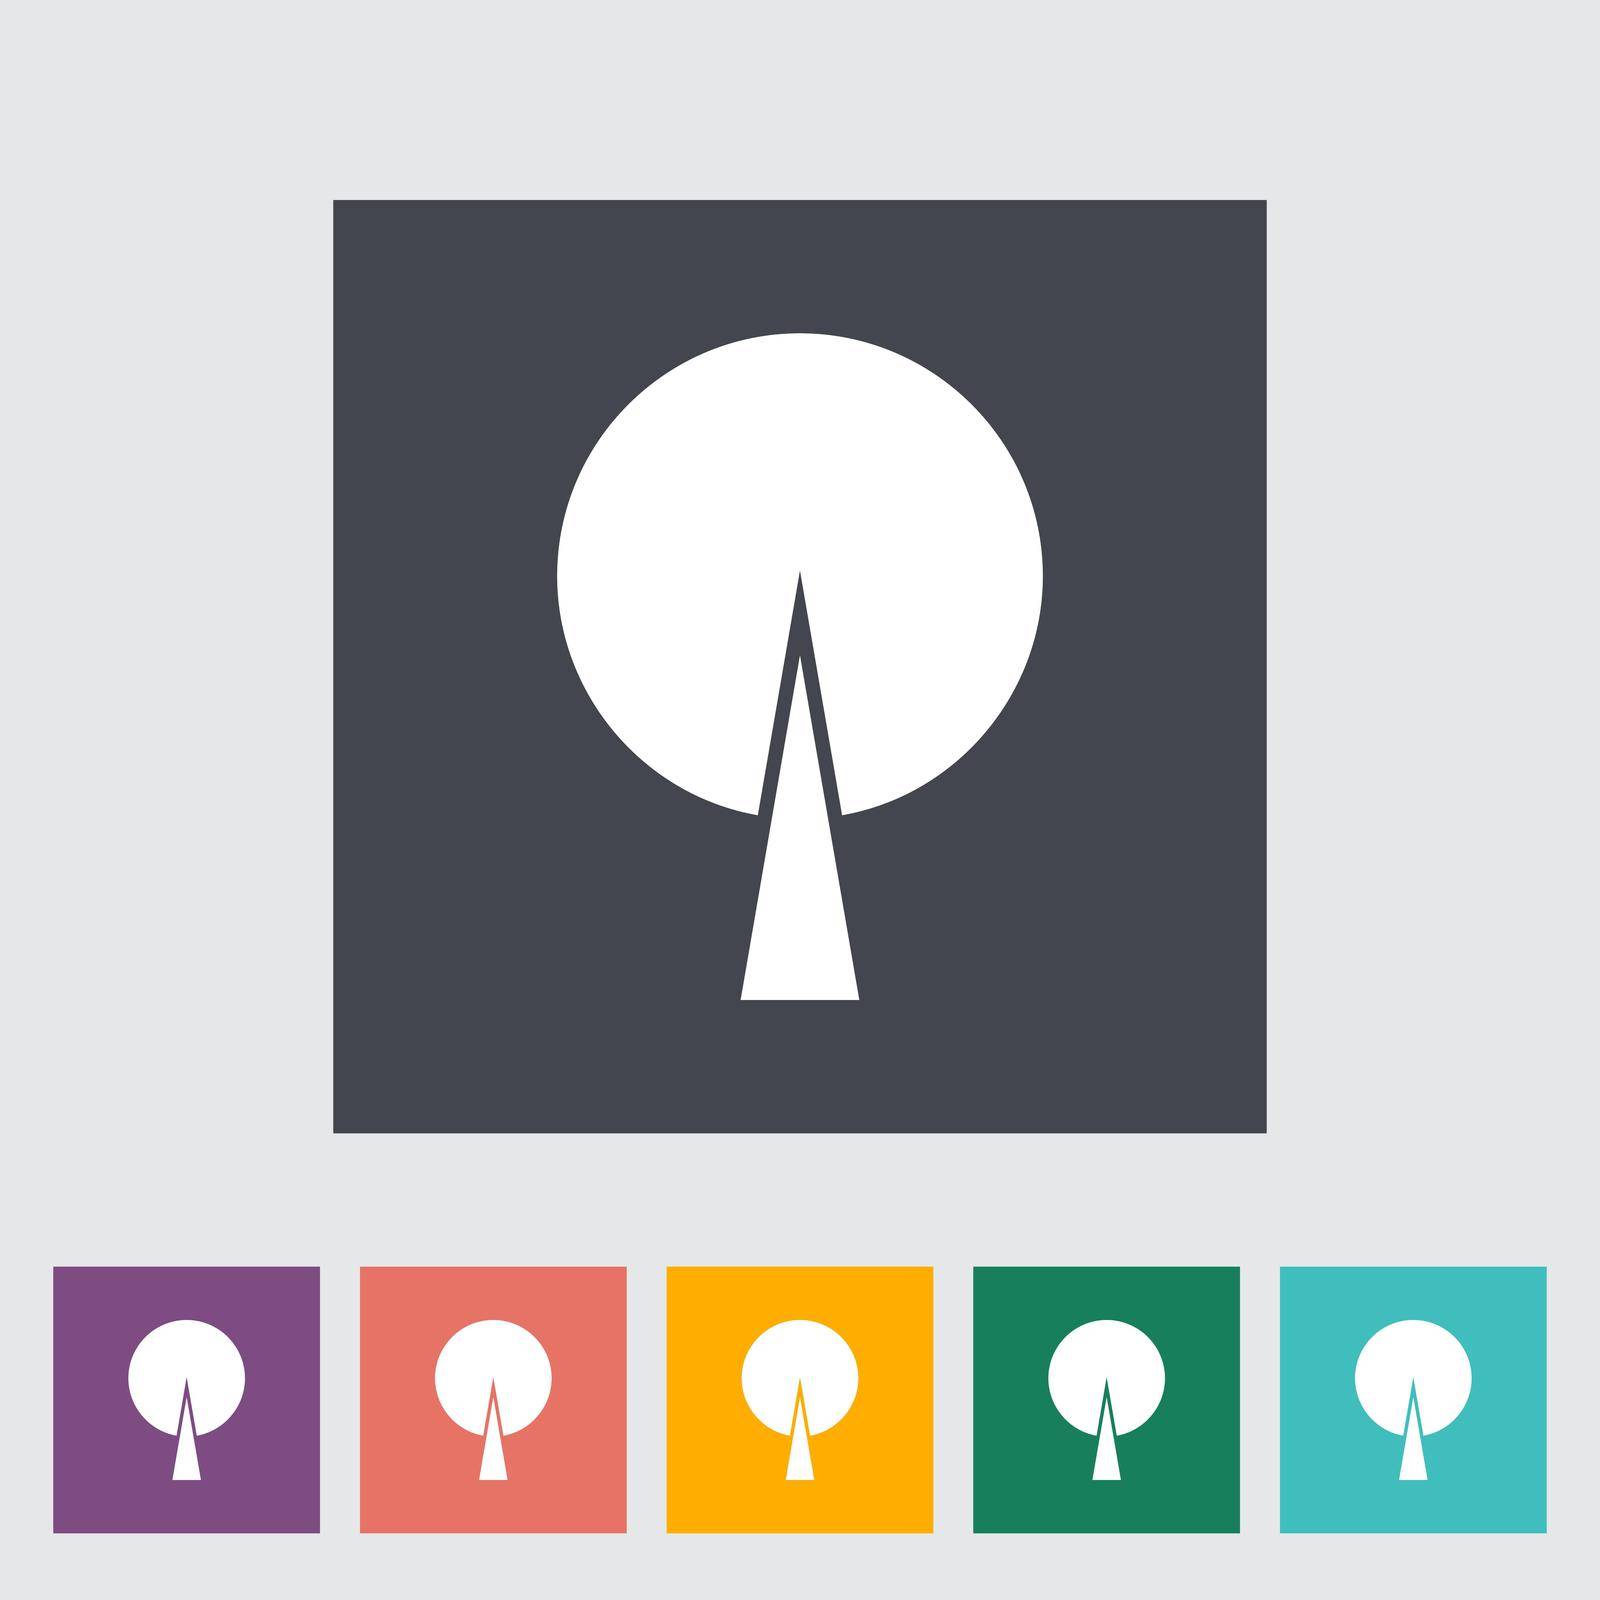 Tree. Single flat icon on the button. Vector illustration.